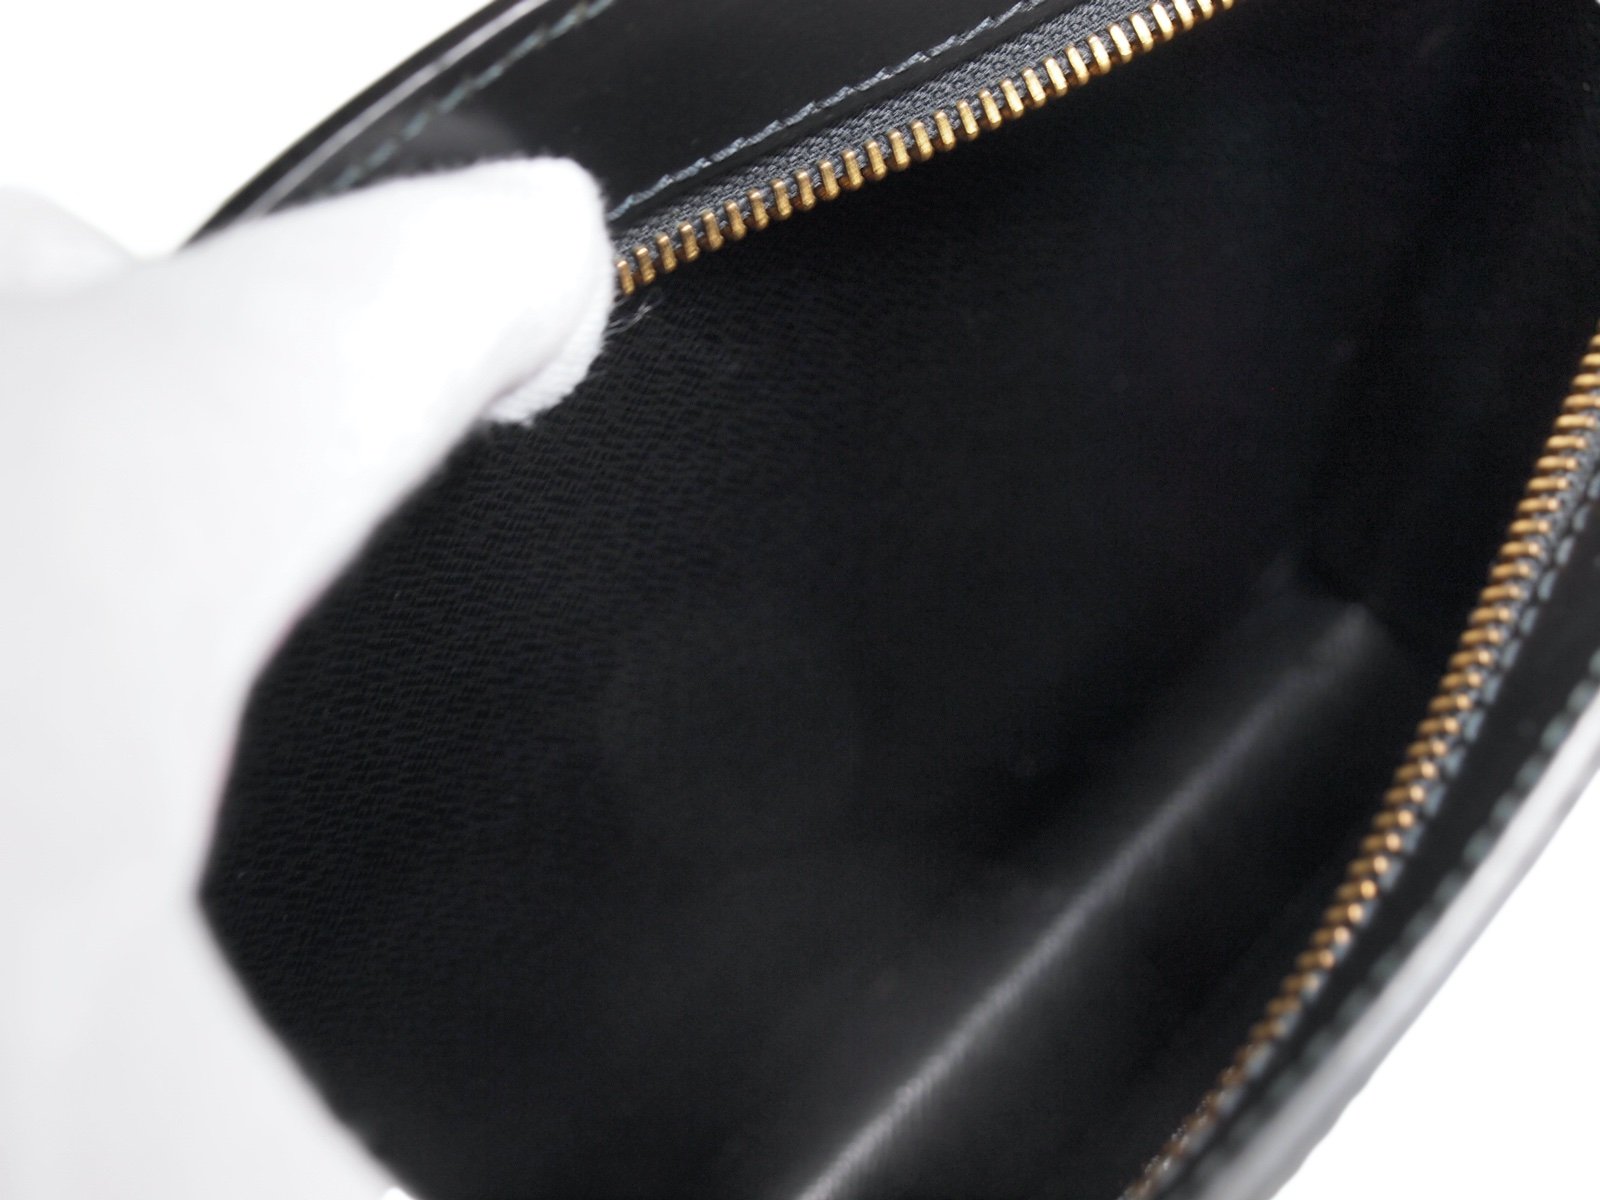 Louis Vuitton Black Epi Leather Pochette Accessoire Bag ○ Labellov ○ Buy  and Sell Authentic Luxury